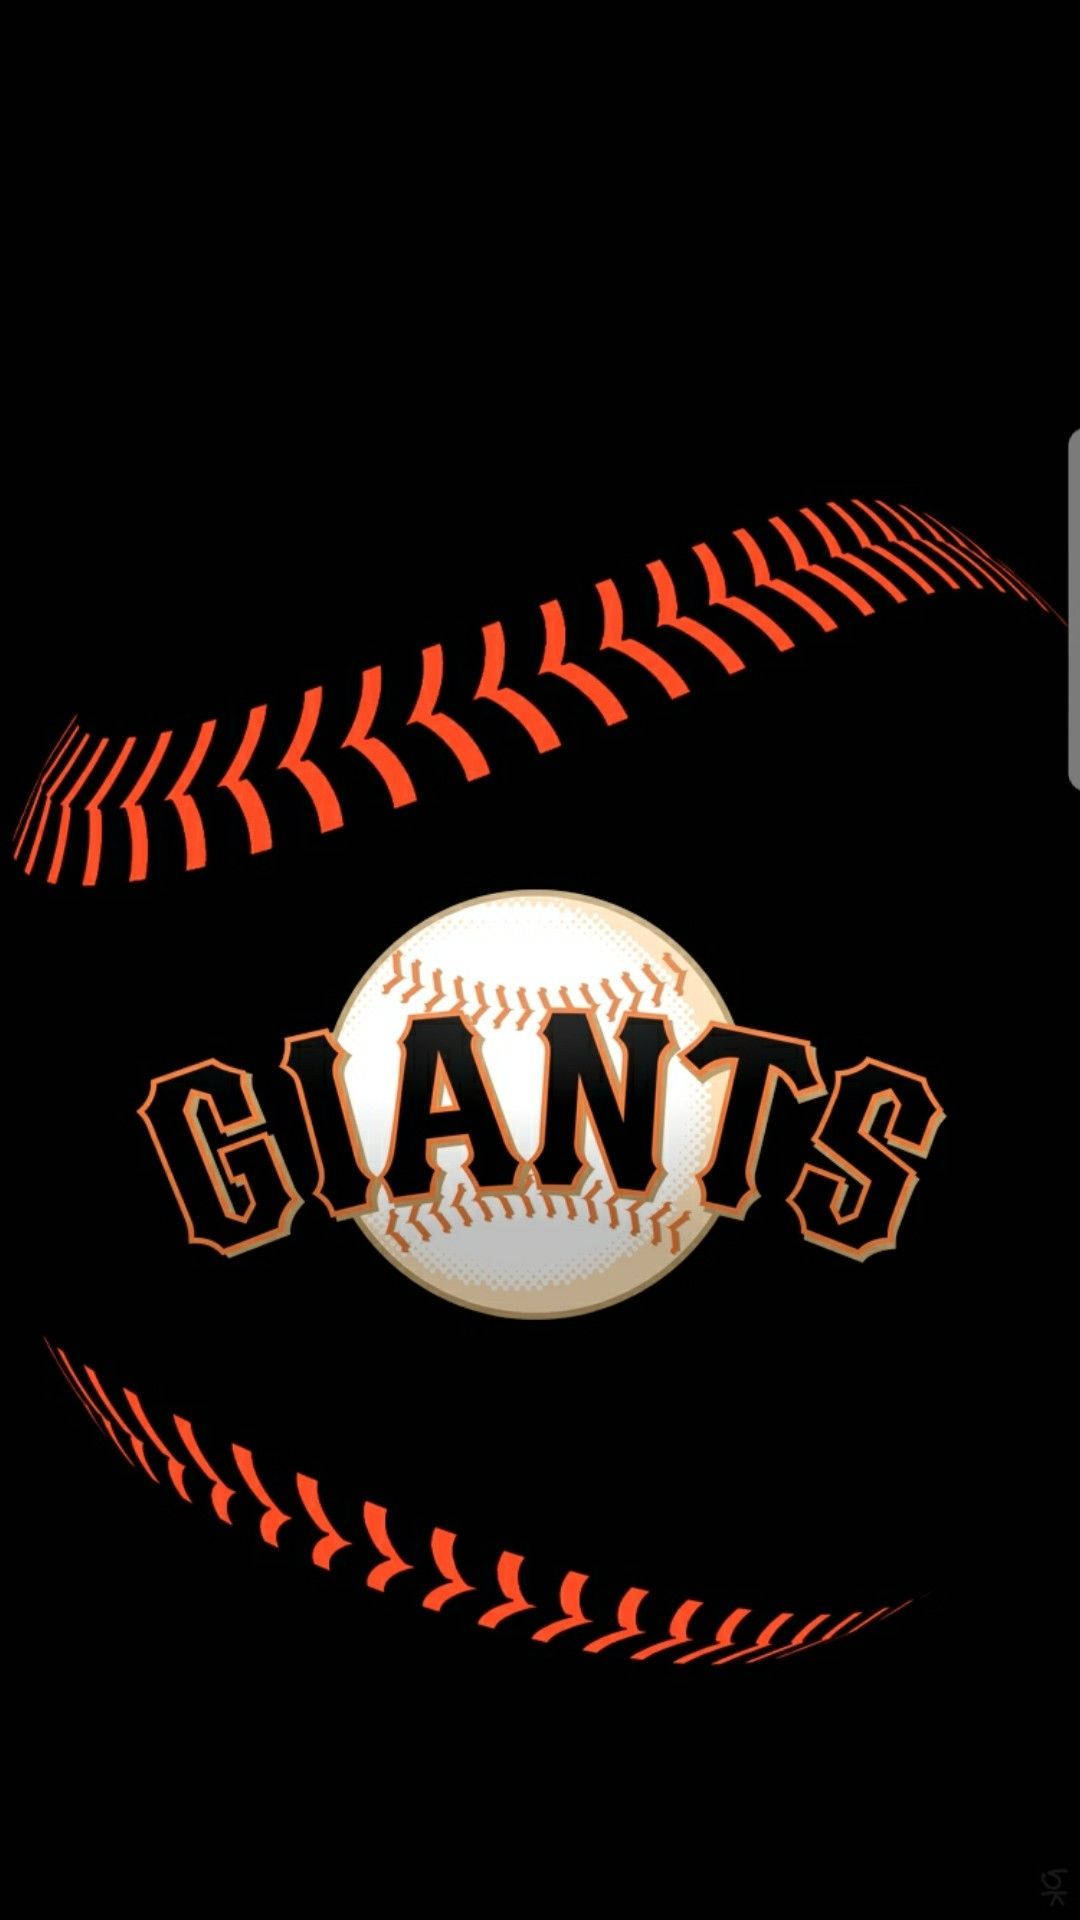 San Francisco Giants In The Baseball Wallpaper